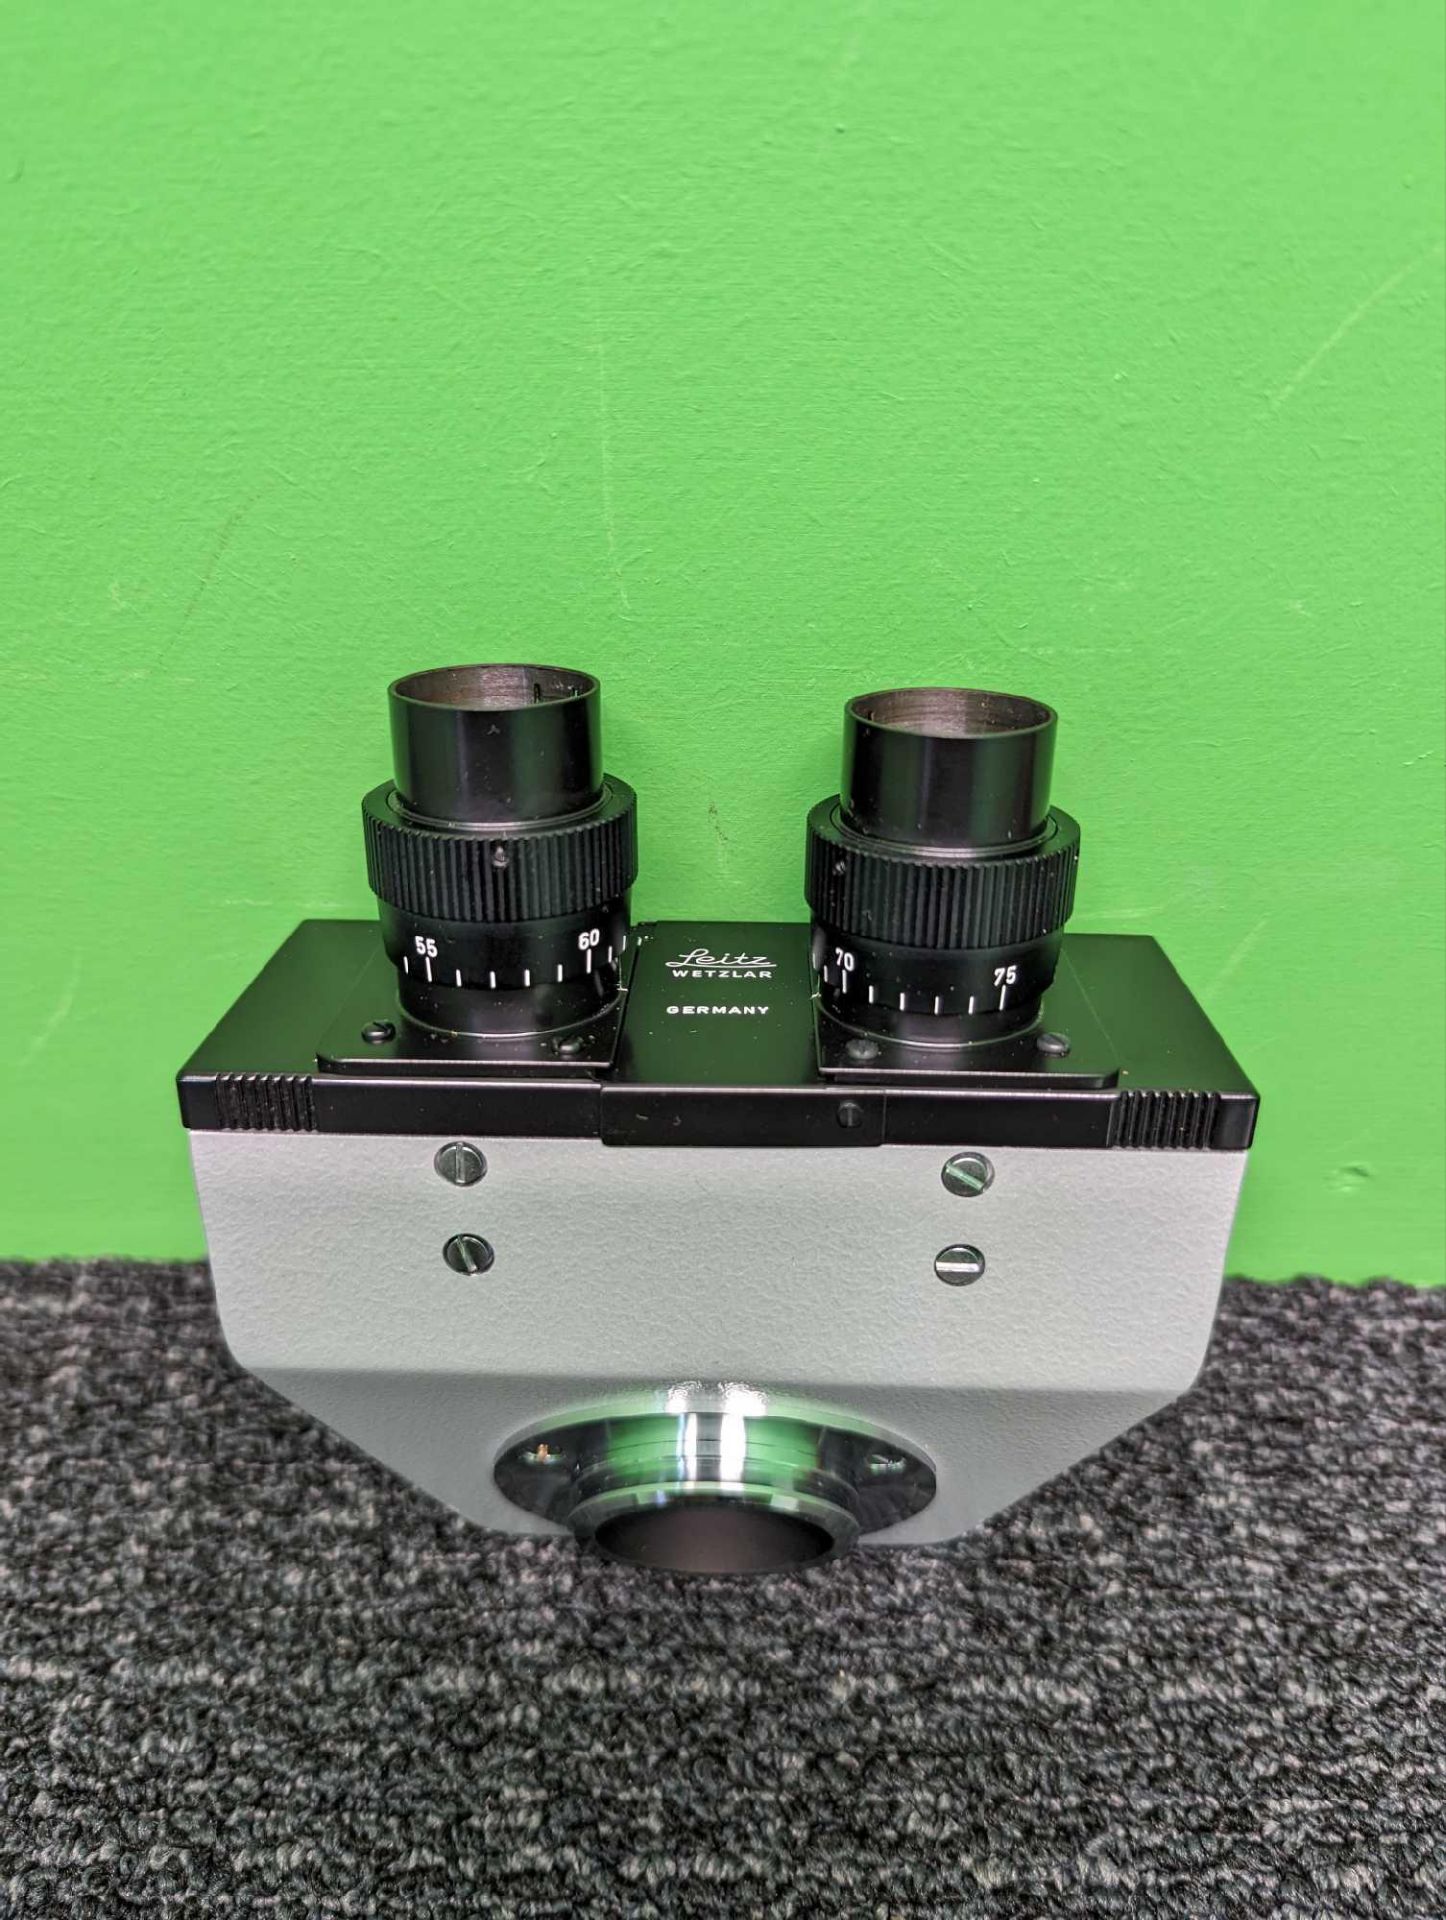 Leitz Wetzlar Binoculars (Model Unknown) - Image 2 of 3